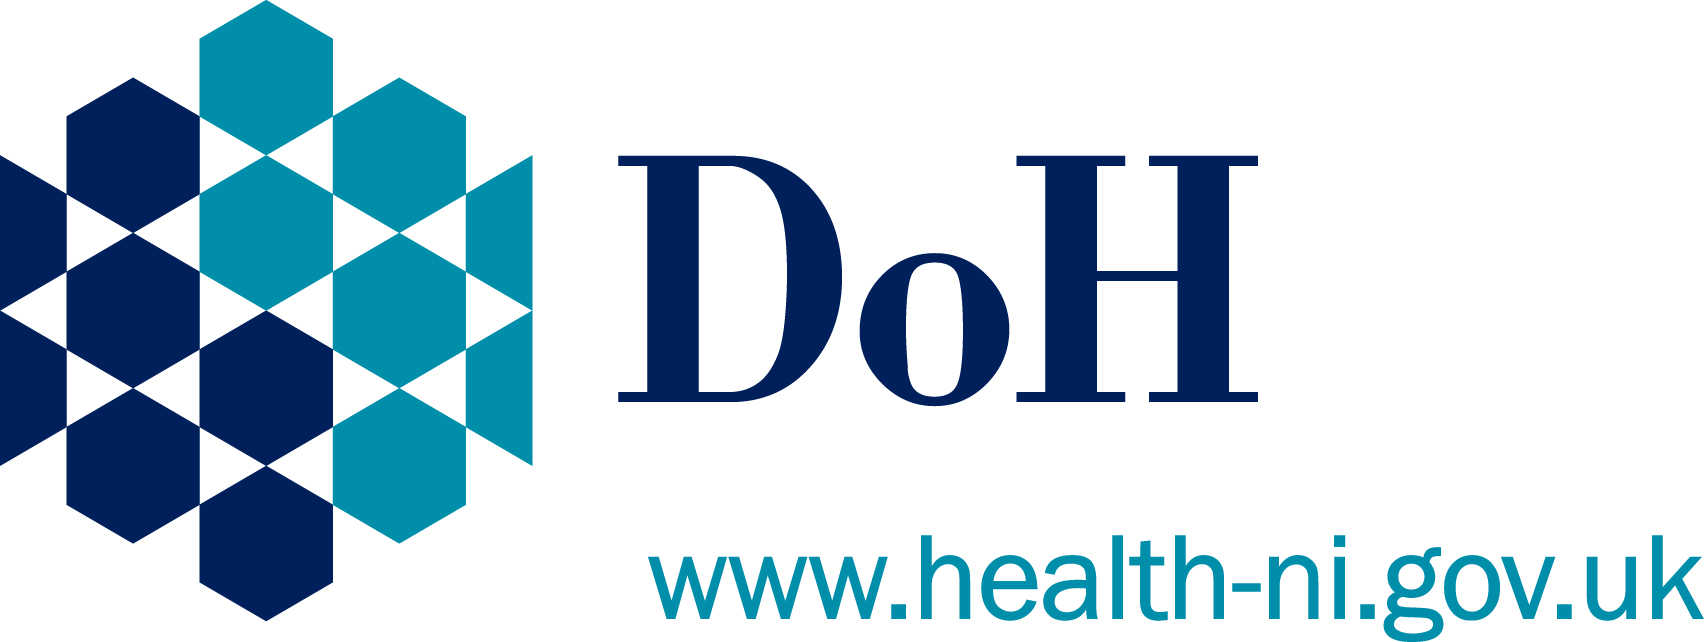 Northern Ireland Department of Health logo